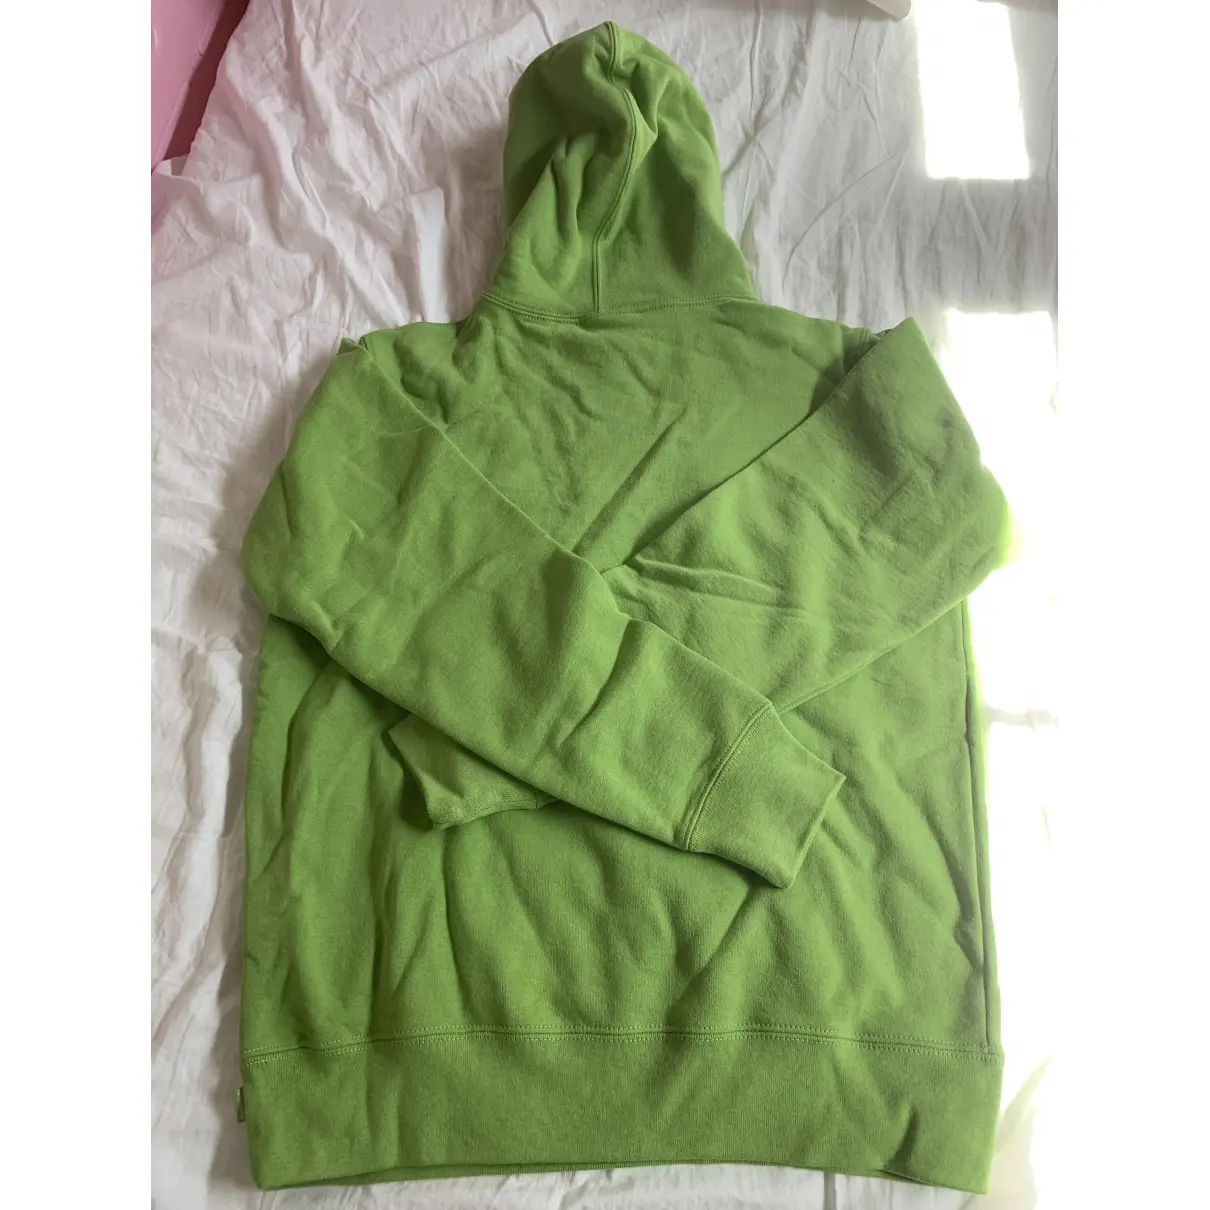 Buy Supreme Green Cotton Knitwear & Sweatshirt online